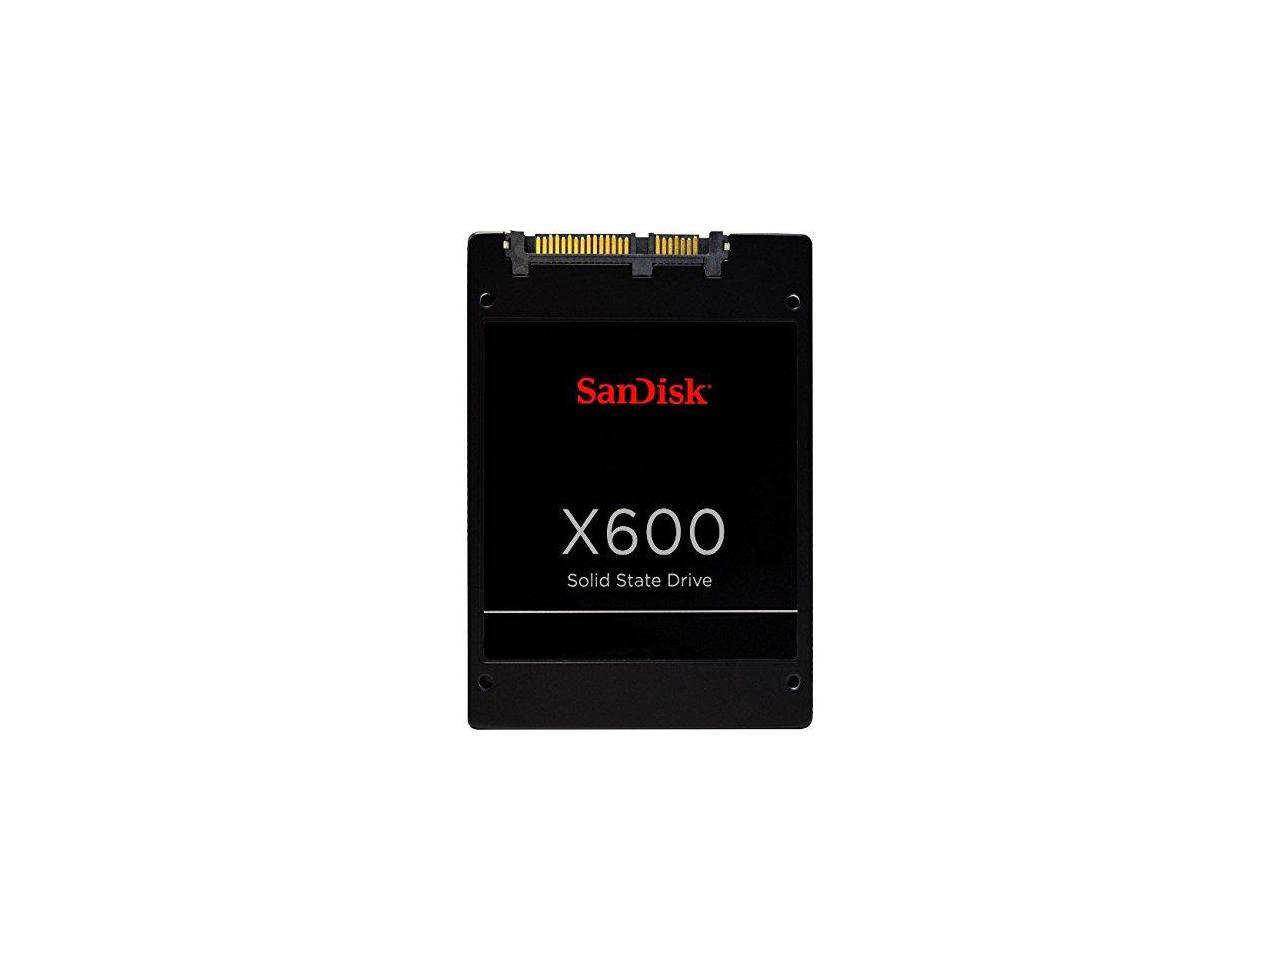 Ennegrecer morir Un fiel 大特価得価 SanDisk SSD 2TB x600 格安超激安